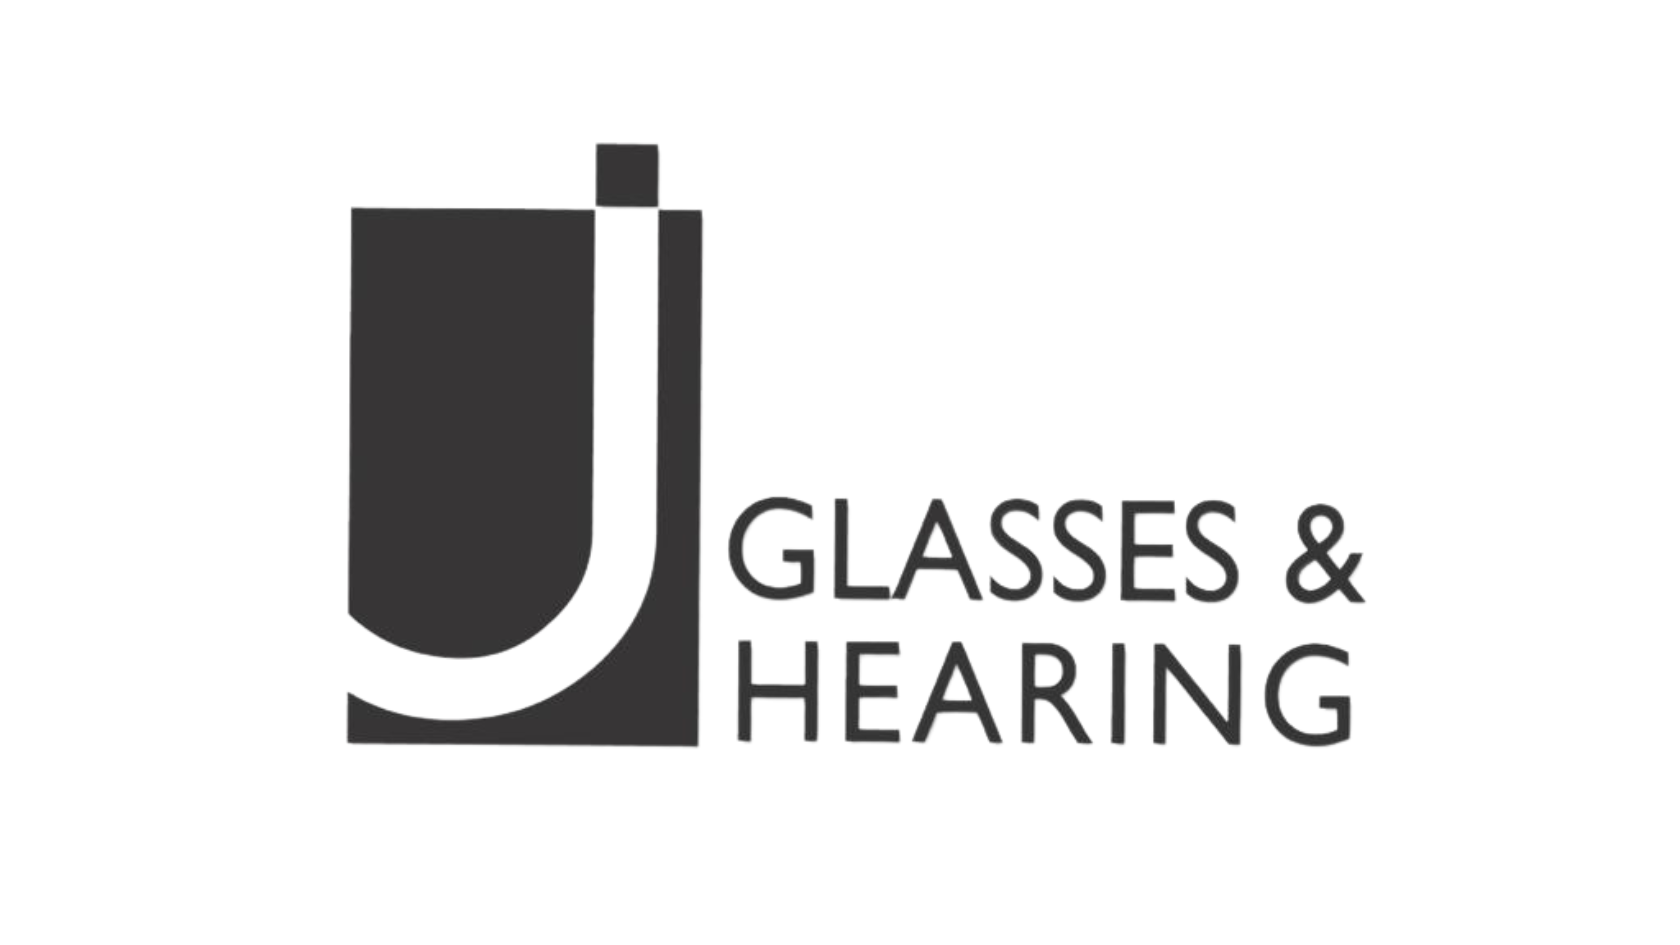 J Glasses & Hearing